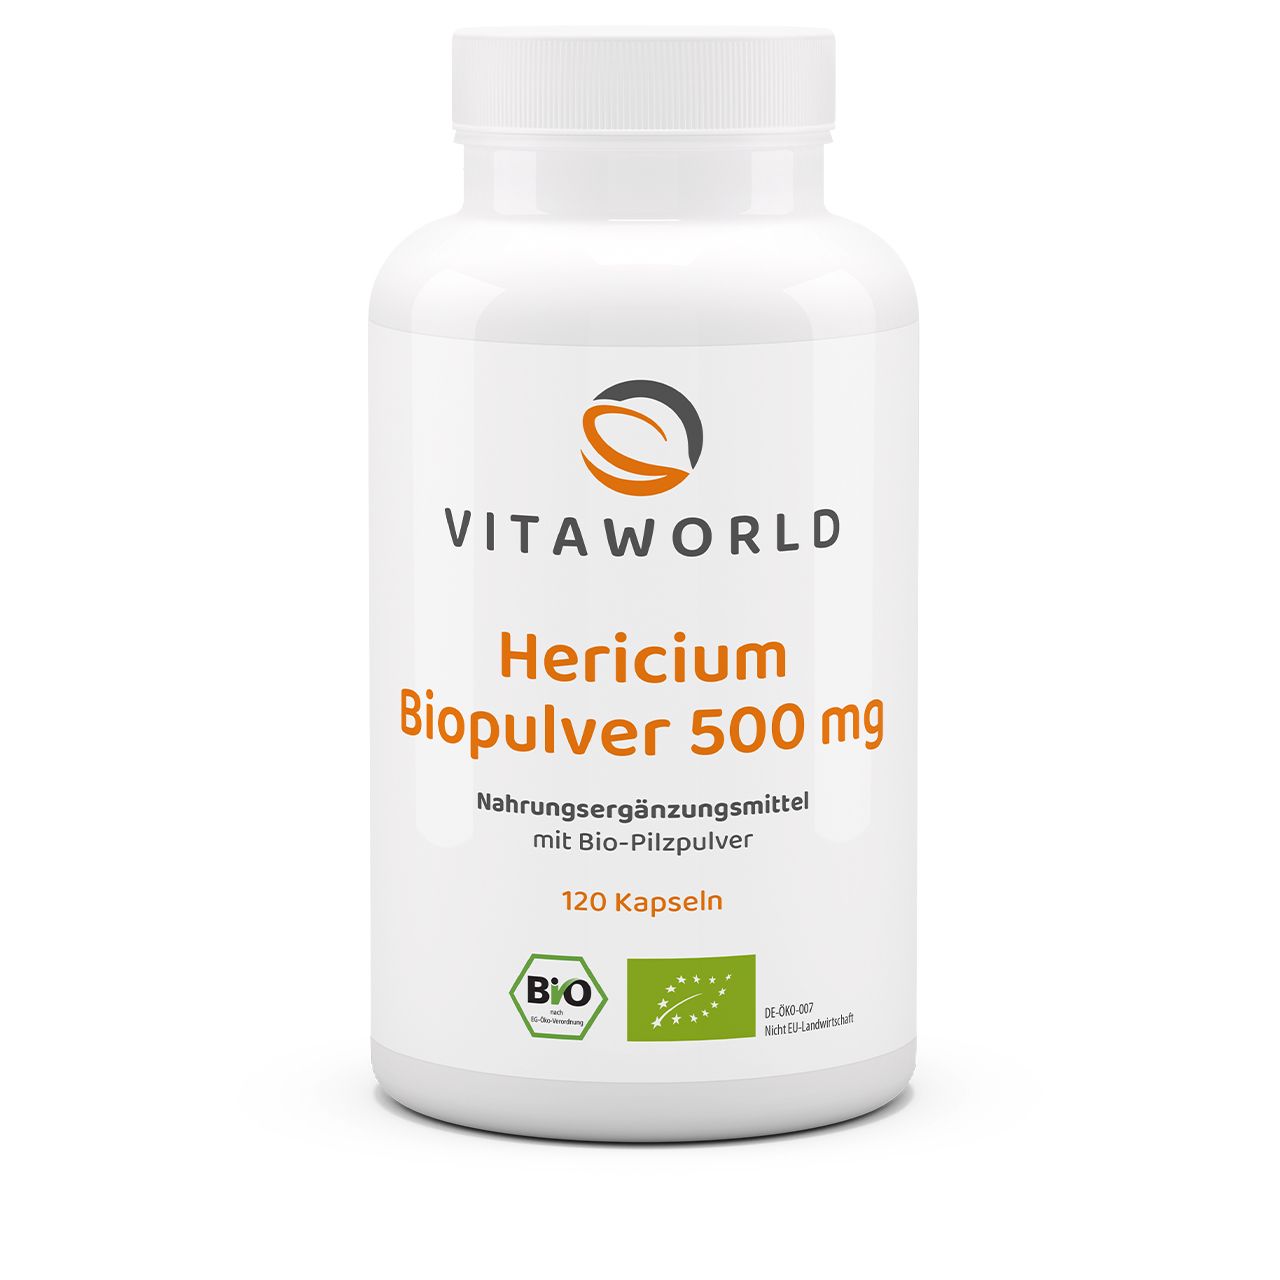 Vitaworld Hericium Biopulver | 120 Kapseln